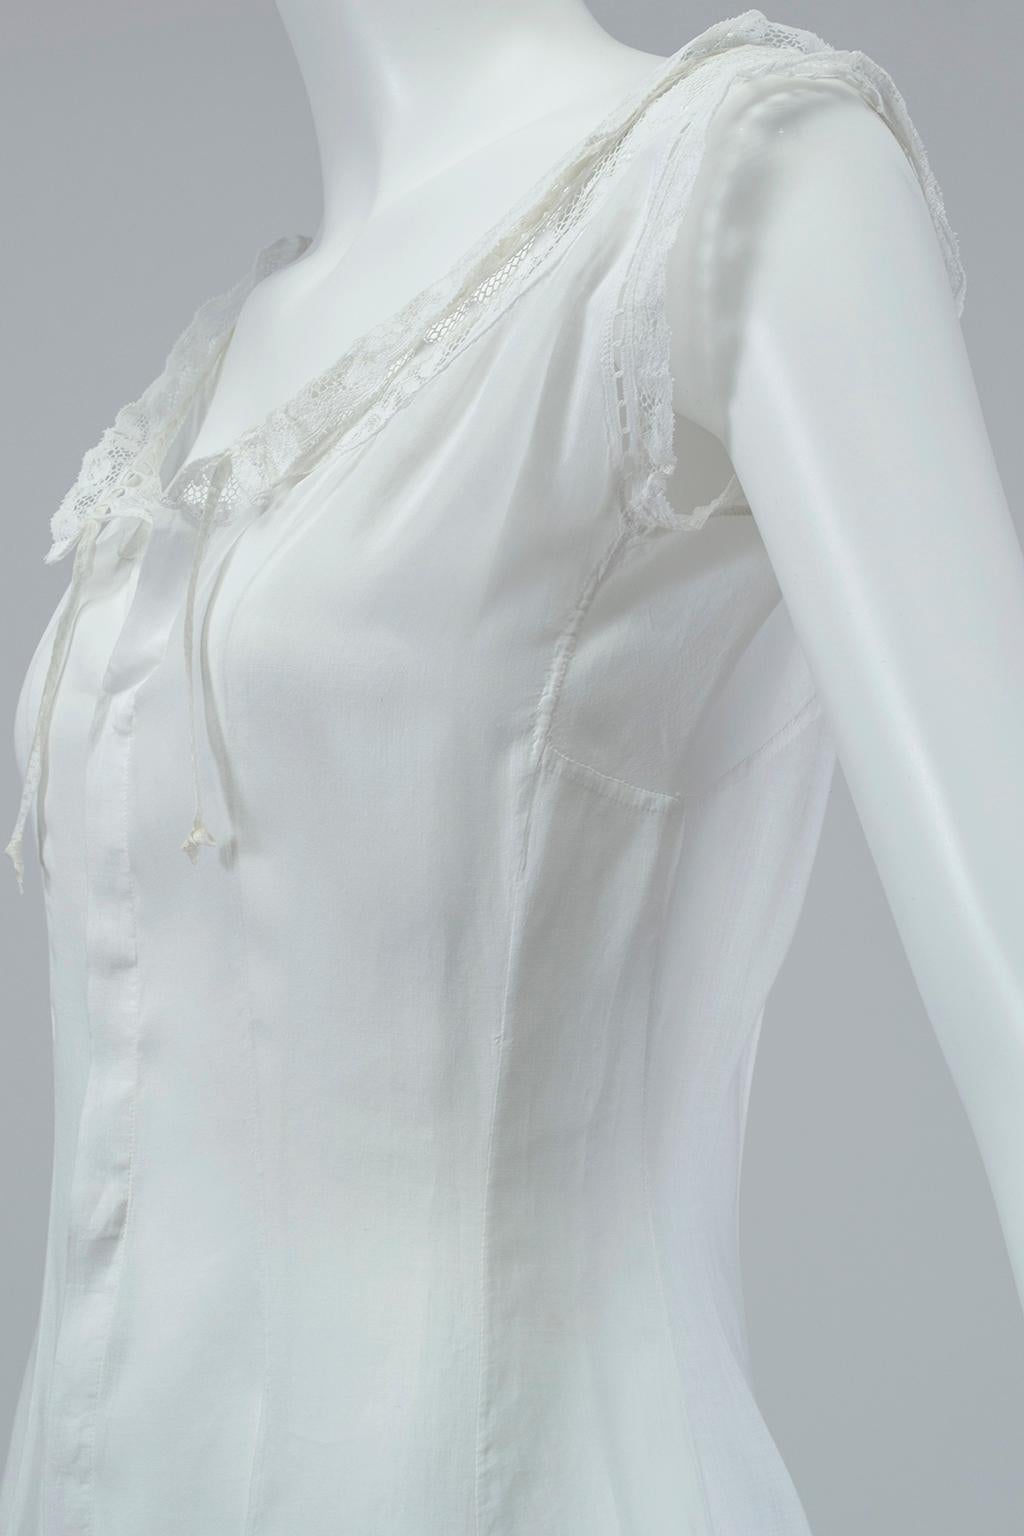 Women's White Edwardian Eyelet and Lace Full Bridal Petticoat Nightgown - XS, 1900s